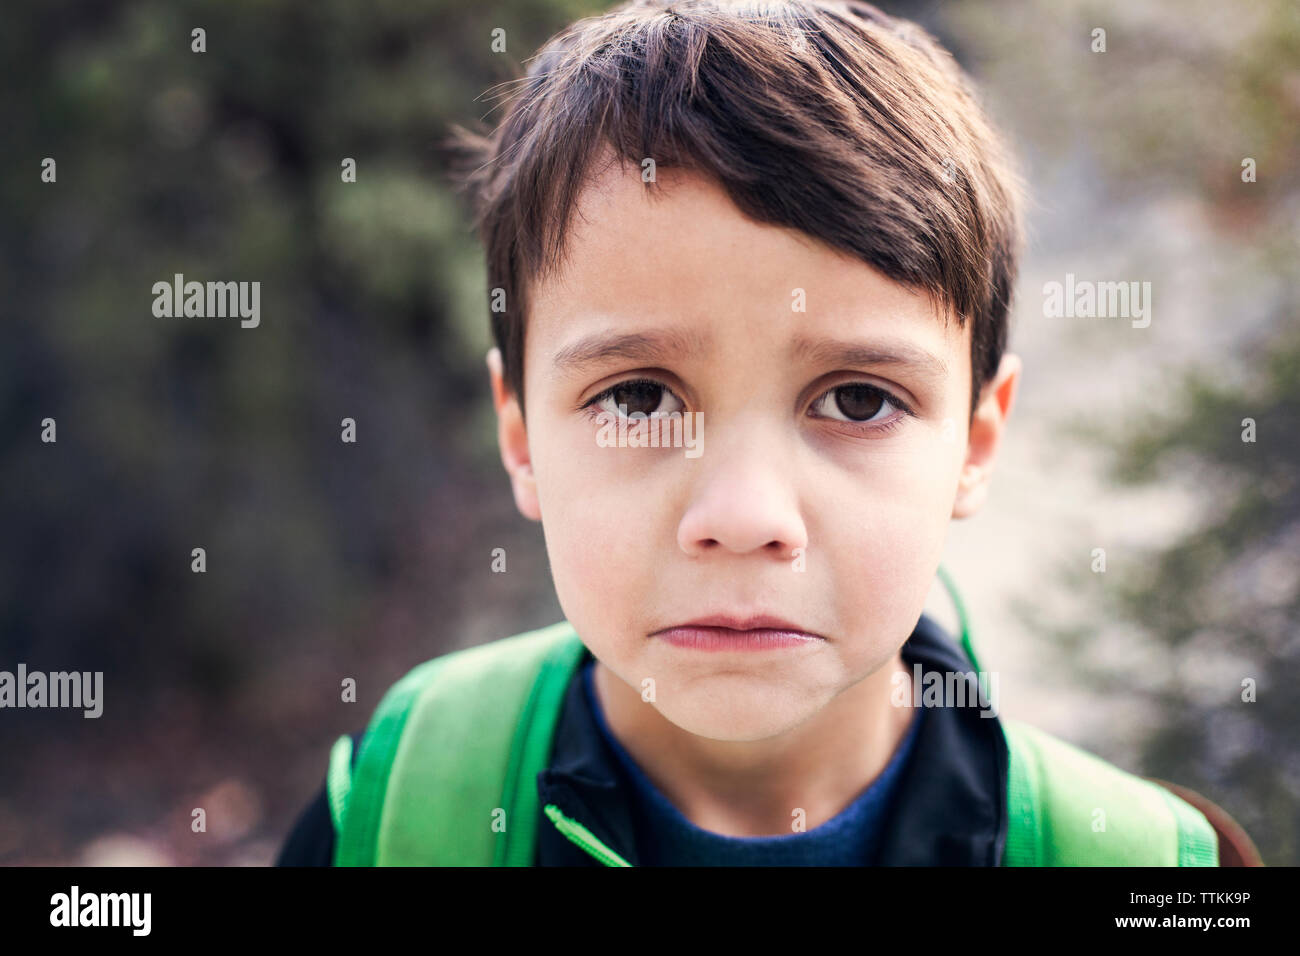 Portrait of sad boy standing outdoors Stock Photo